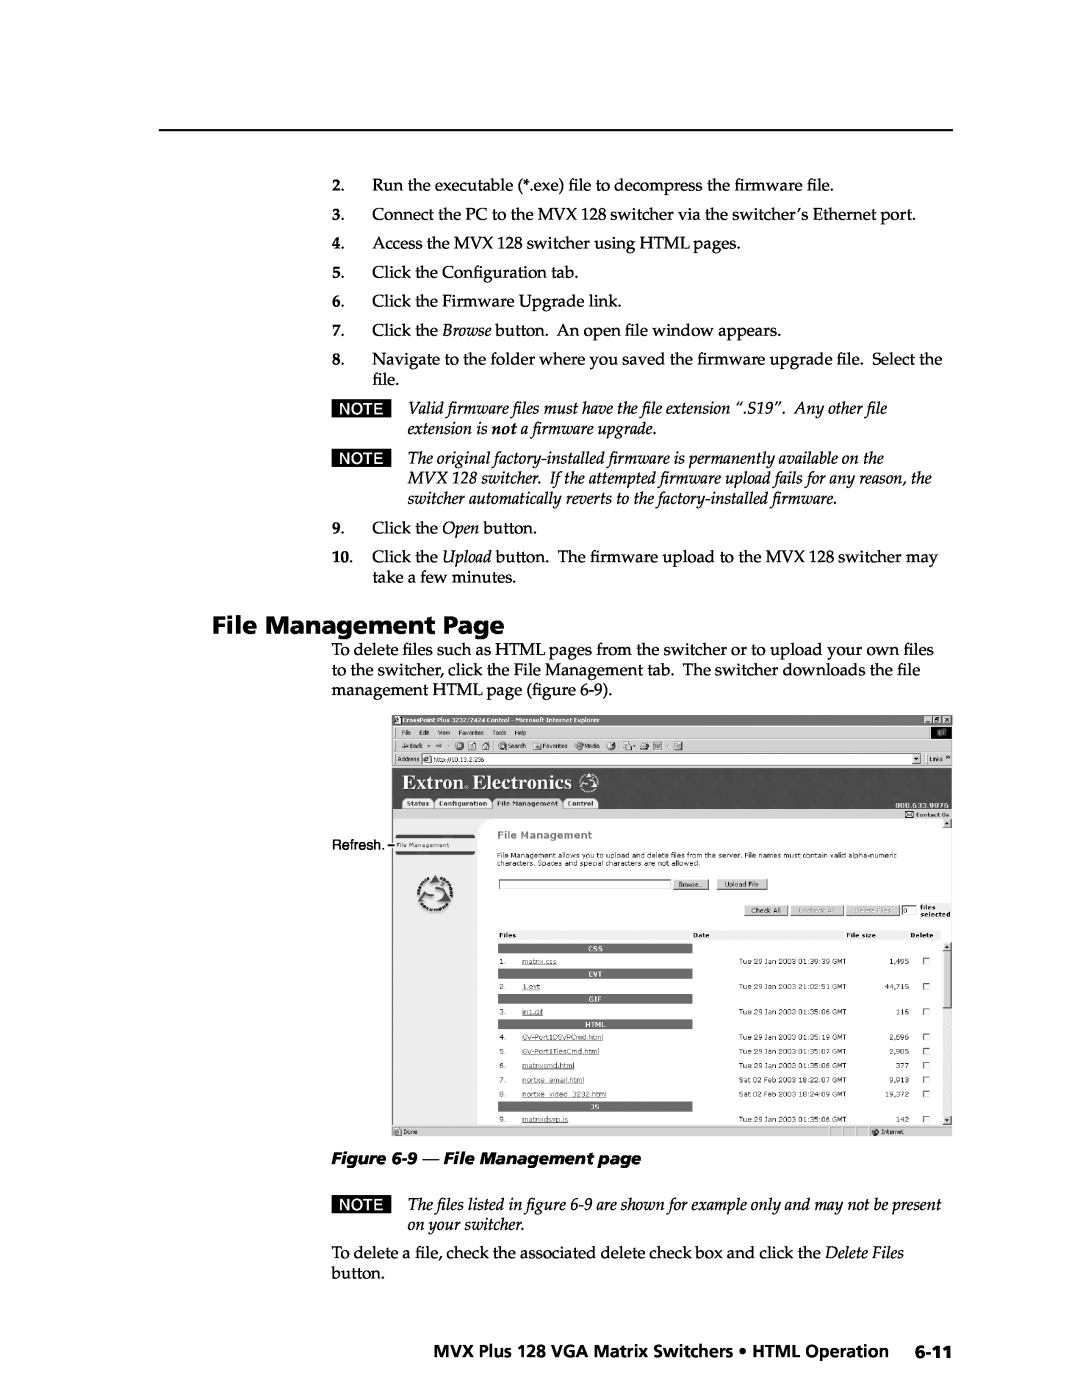 Extron electronic MVX PLUS 128 manual File Management Page, 9 - File Management page 